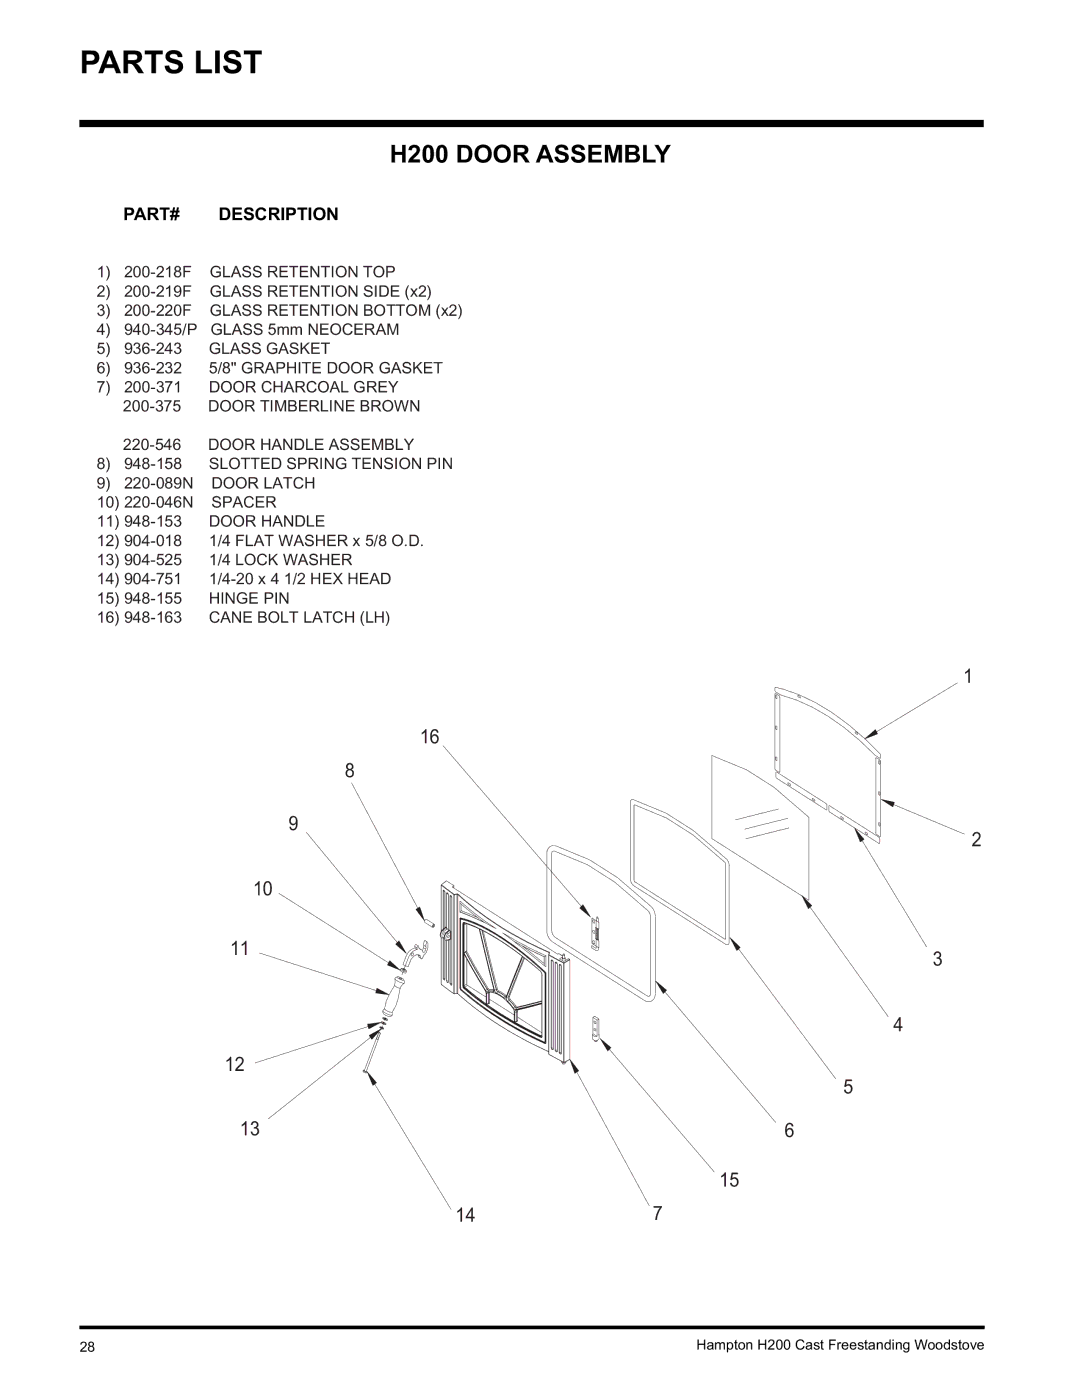 Hampton Direct installation manual H200 Door Assembly, PART# Description 